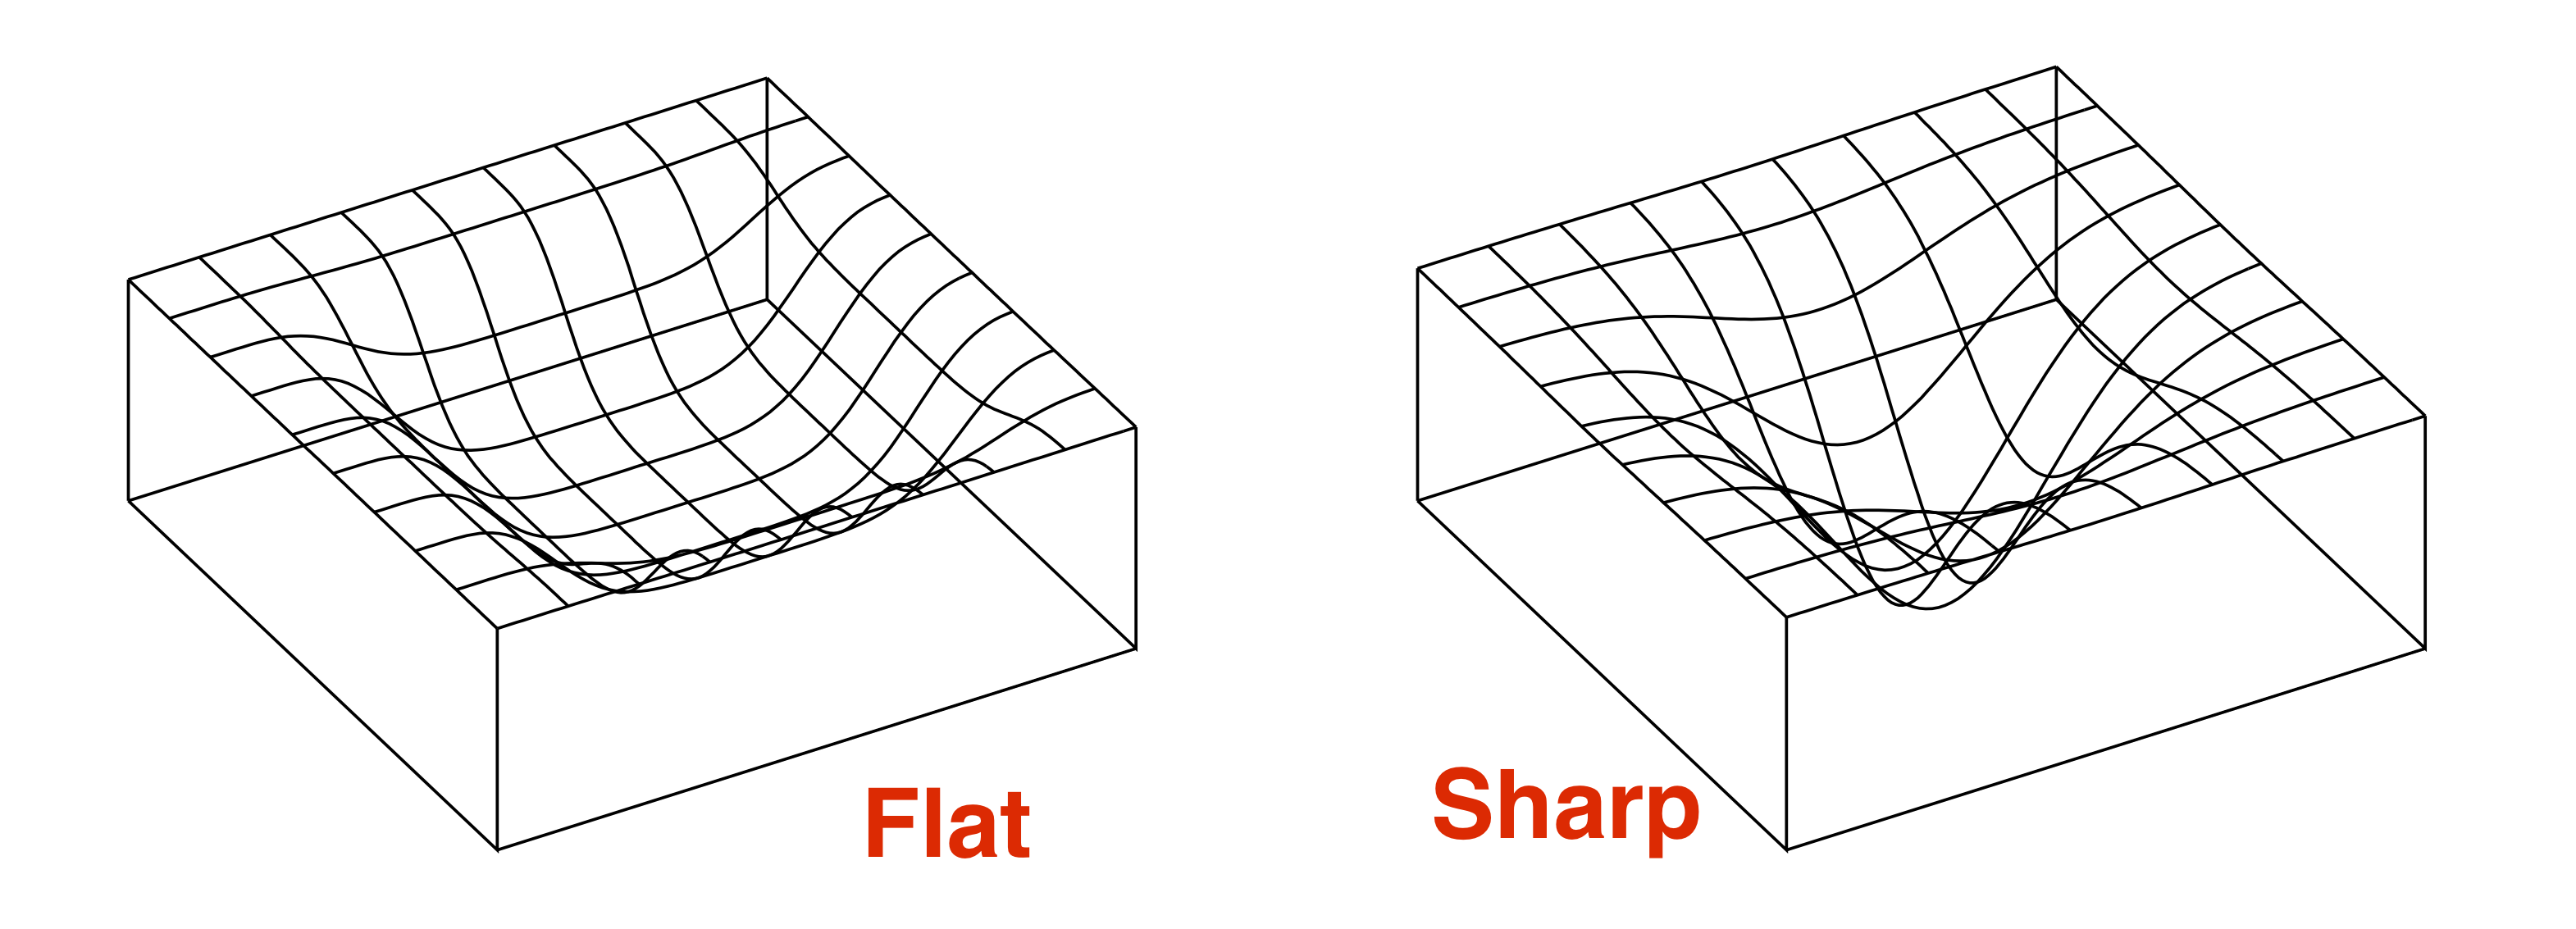 Flat vs sharp minima